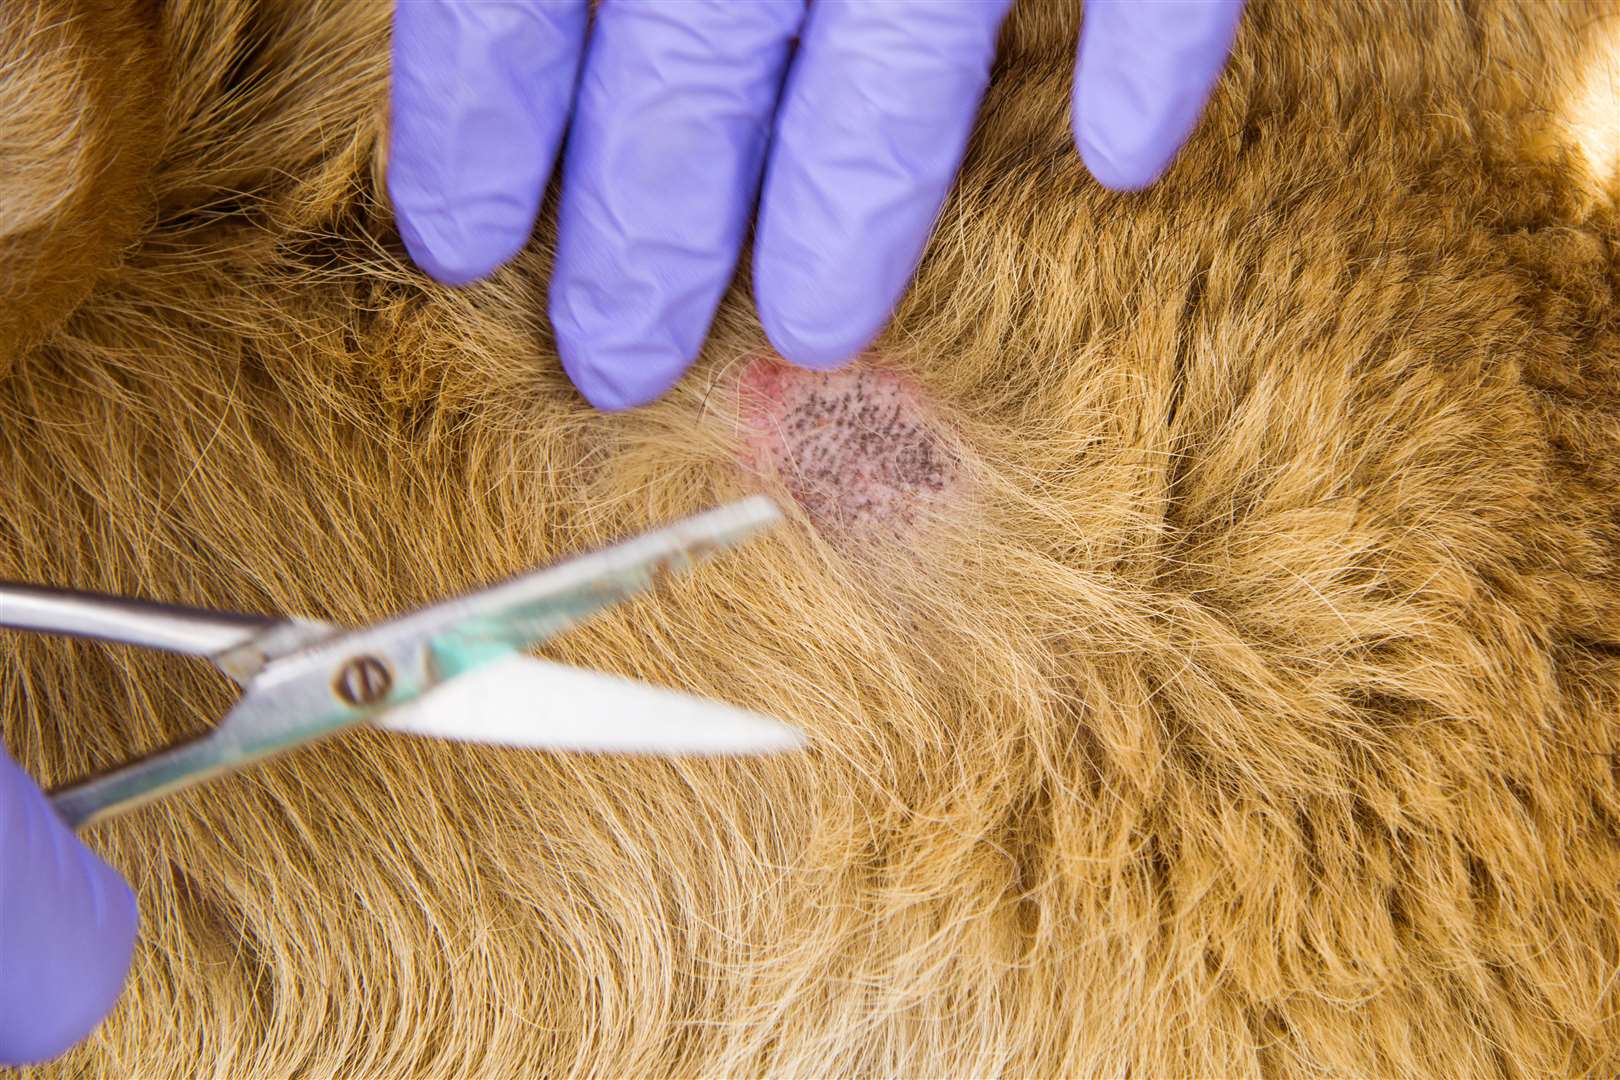 A dermatitis wound on the skin of a dog. Photo: istock/Natalya Stepina